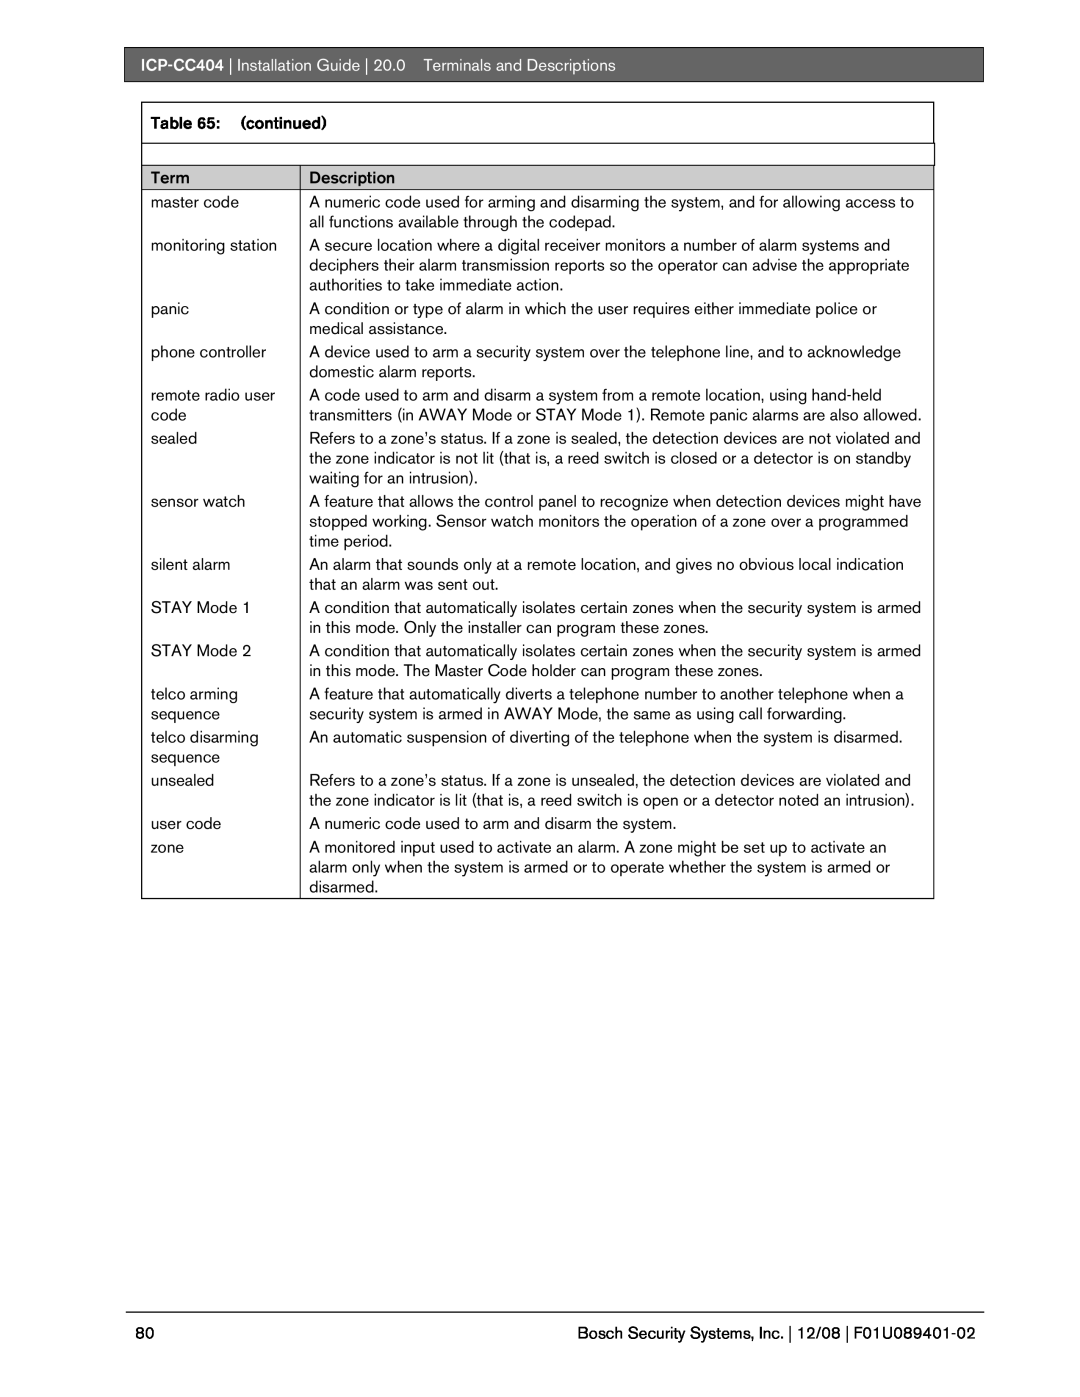 Bosch Appliances ICP-CC404 manual continued 